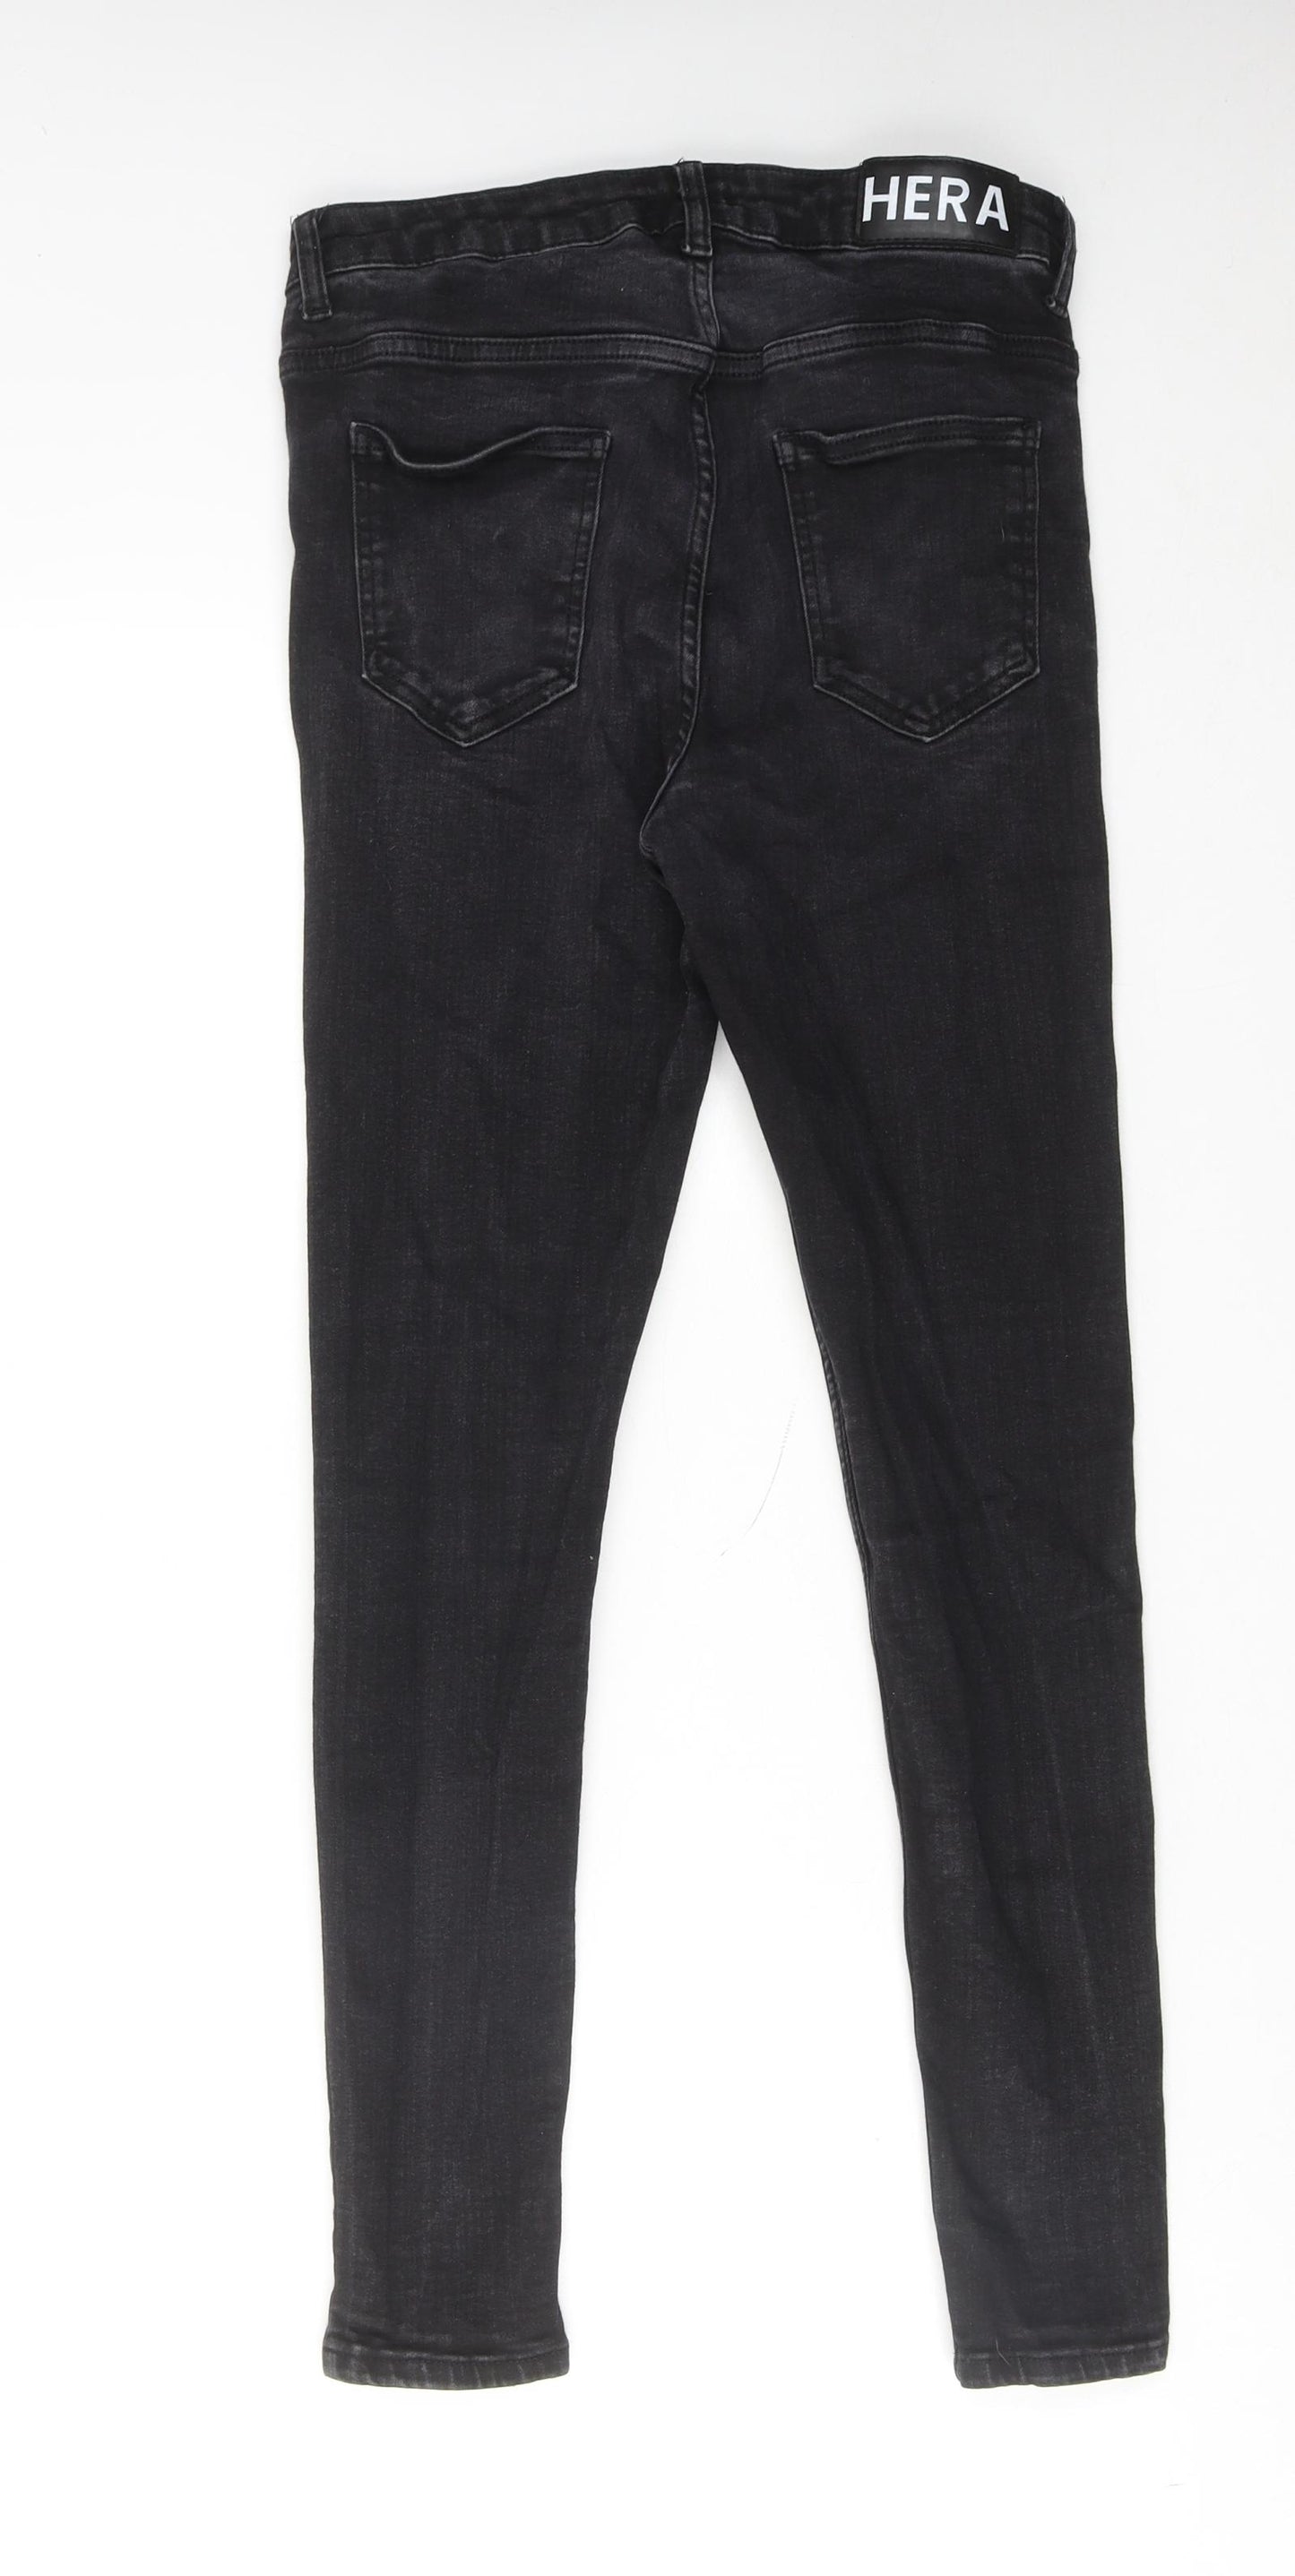 Hera Womens Black Cotton Skinny Jeans Size 28 in Regular Zip